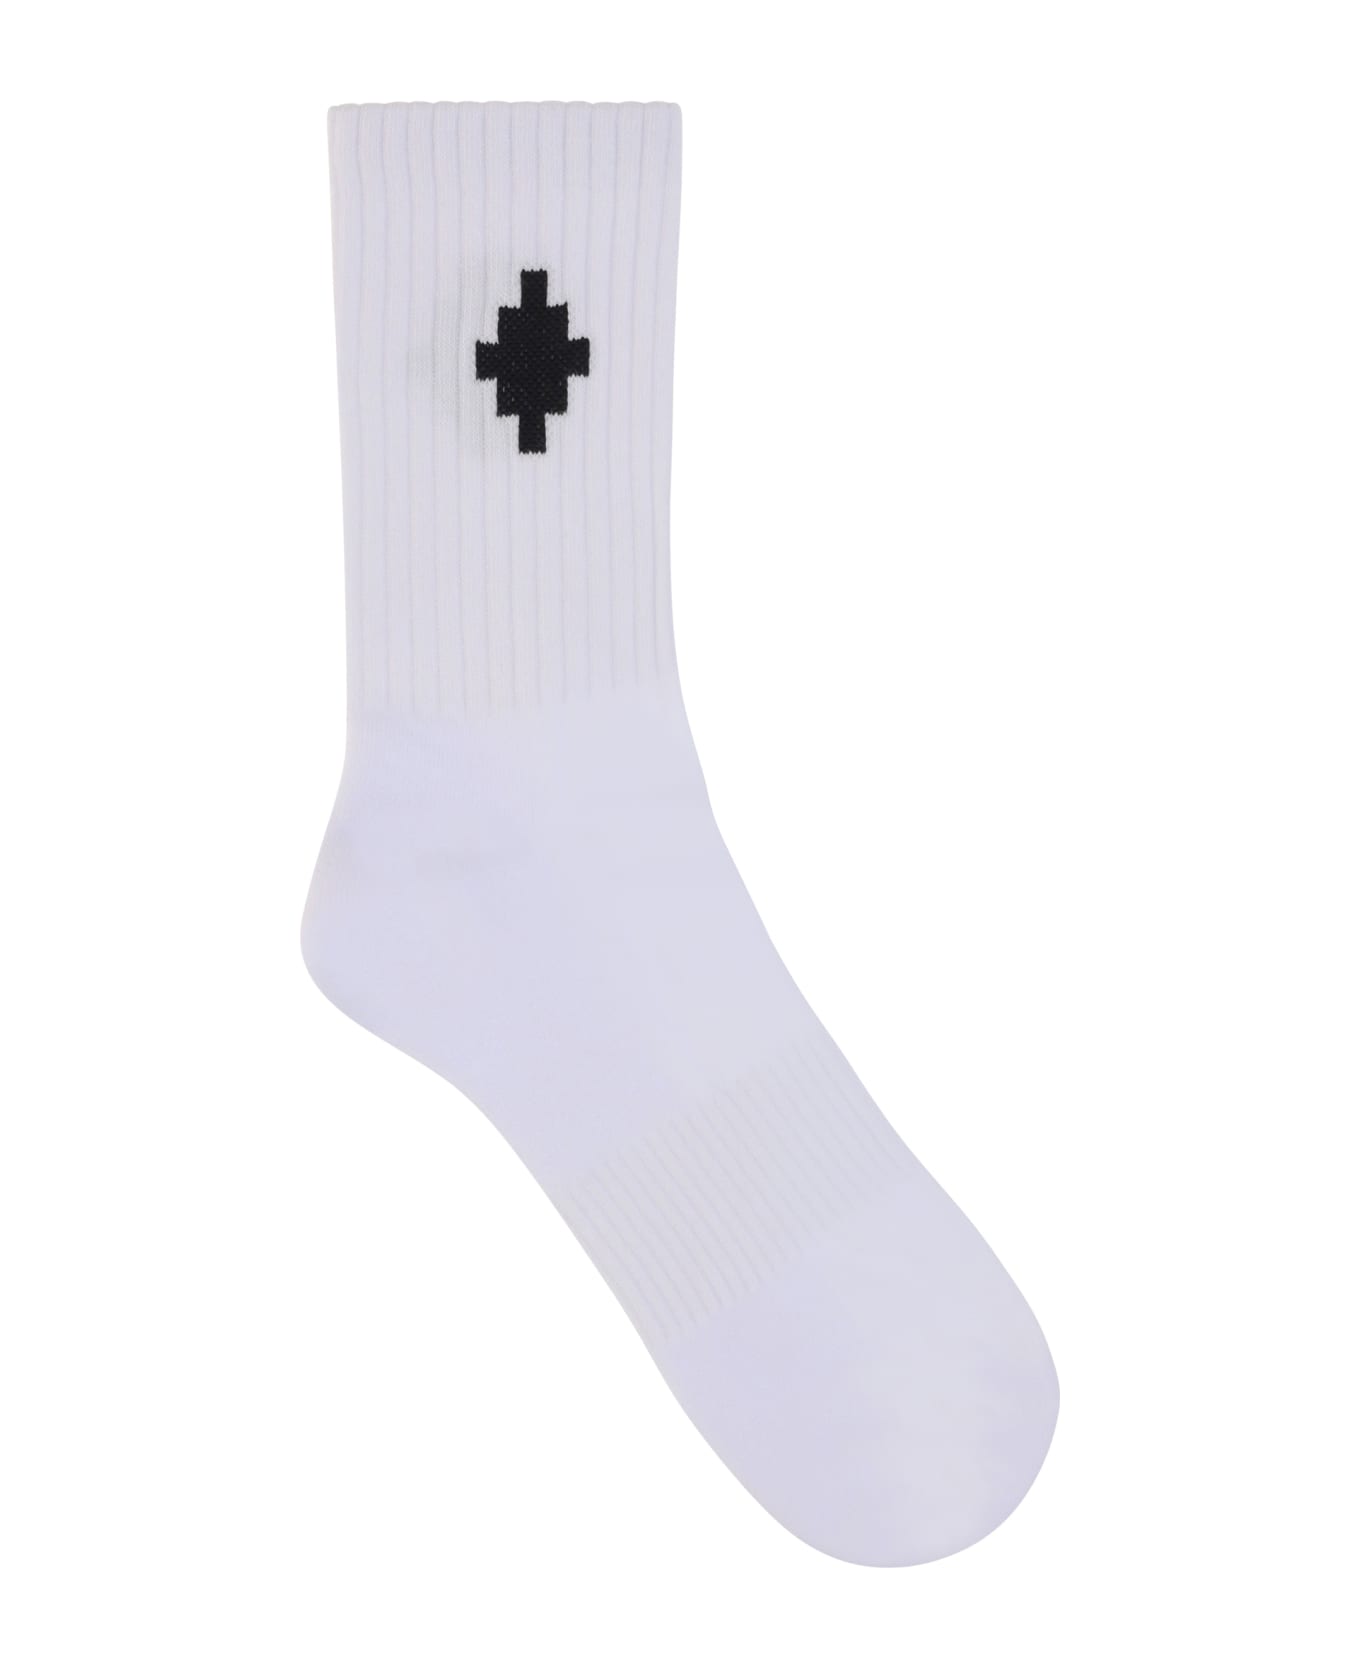 Marcelo Burlon Socks With Cross - White Black 靴下